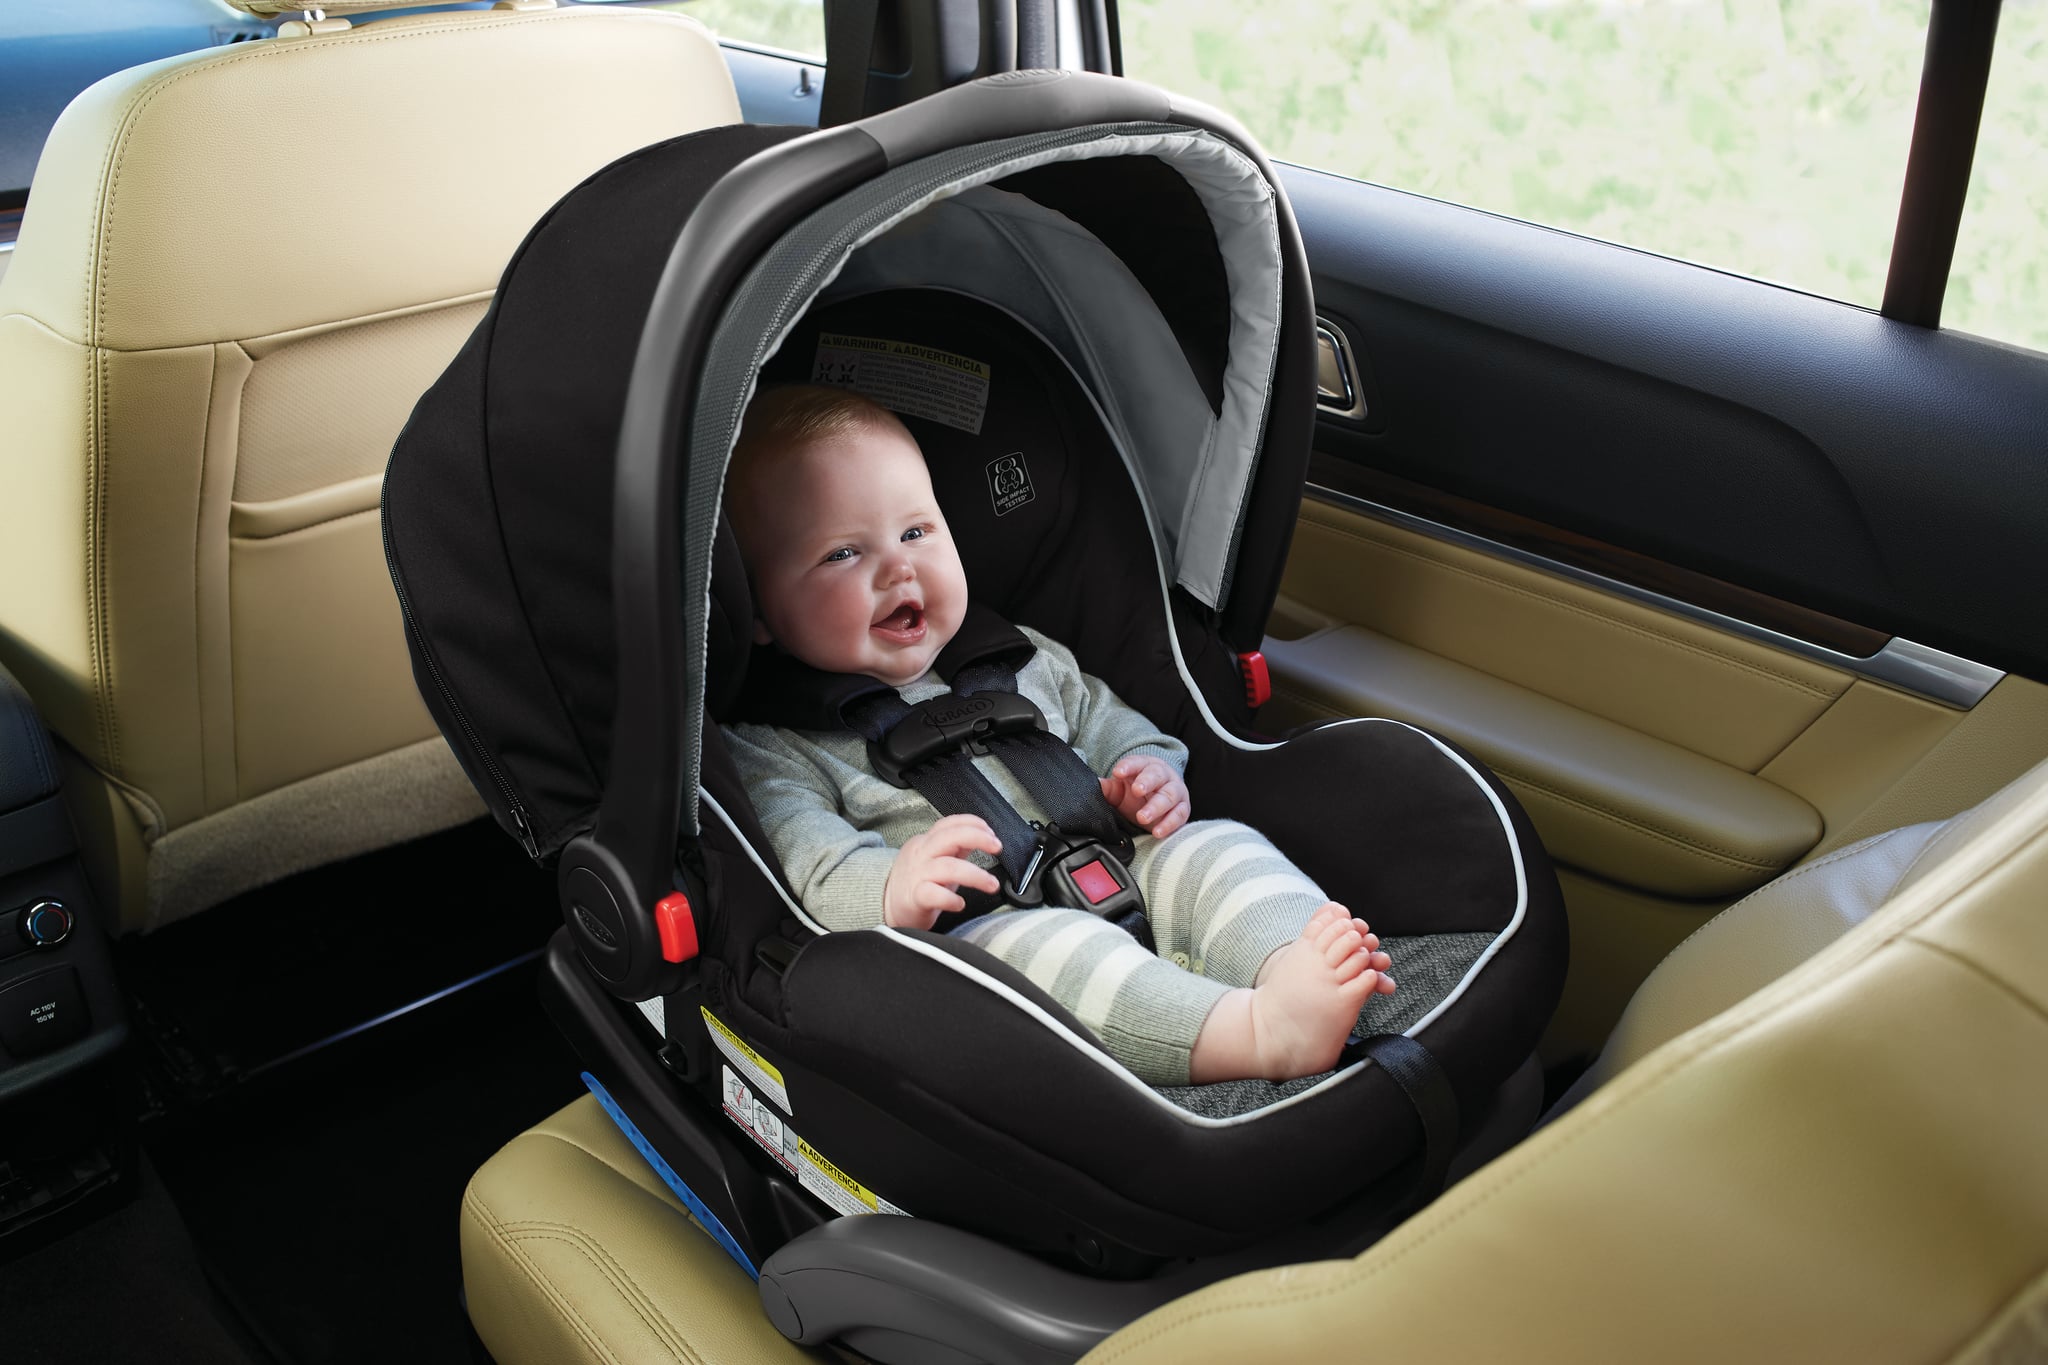 snugride snuglock 35 dlx infant car seat